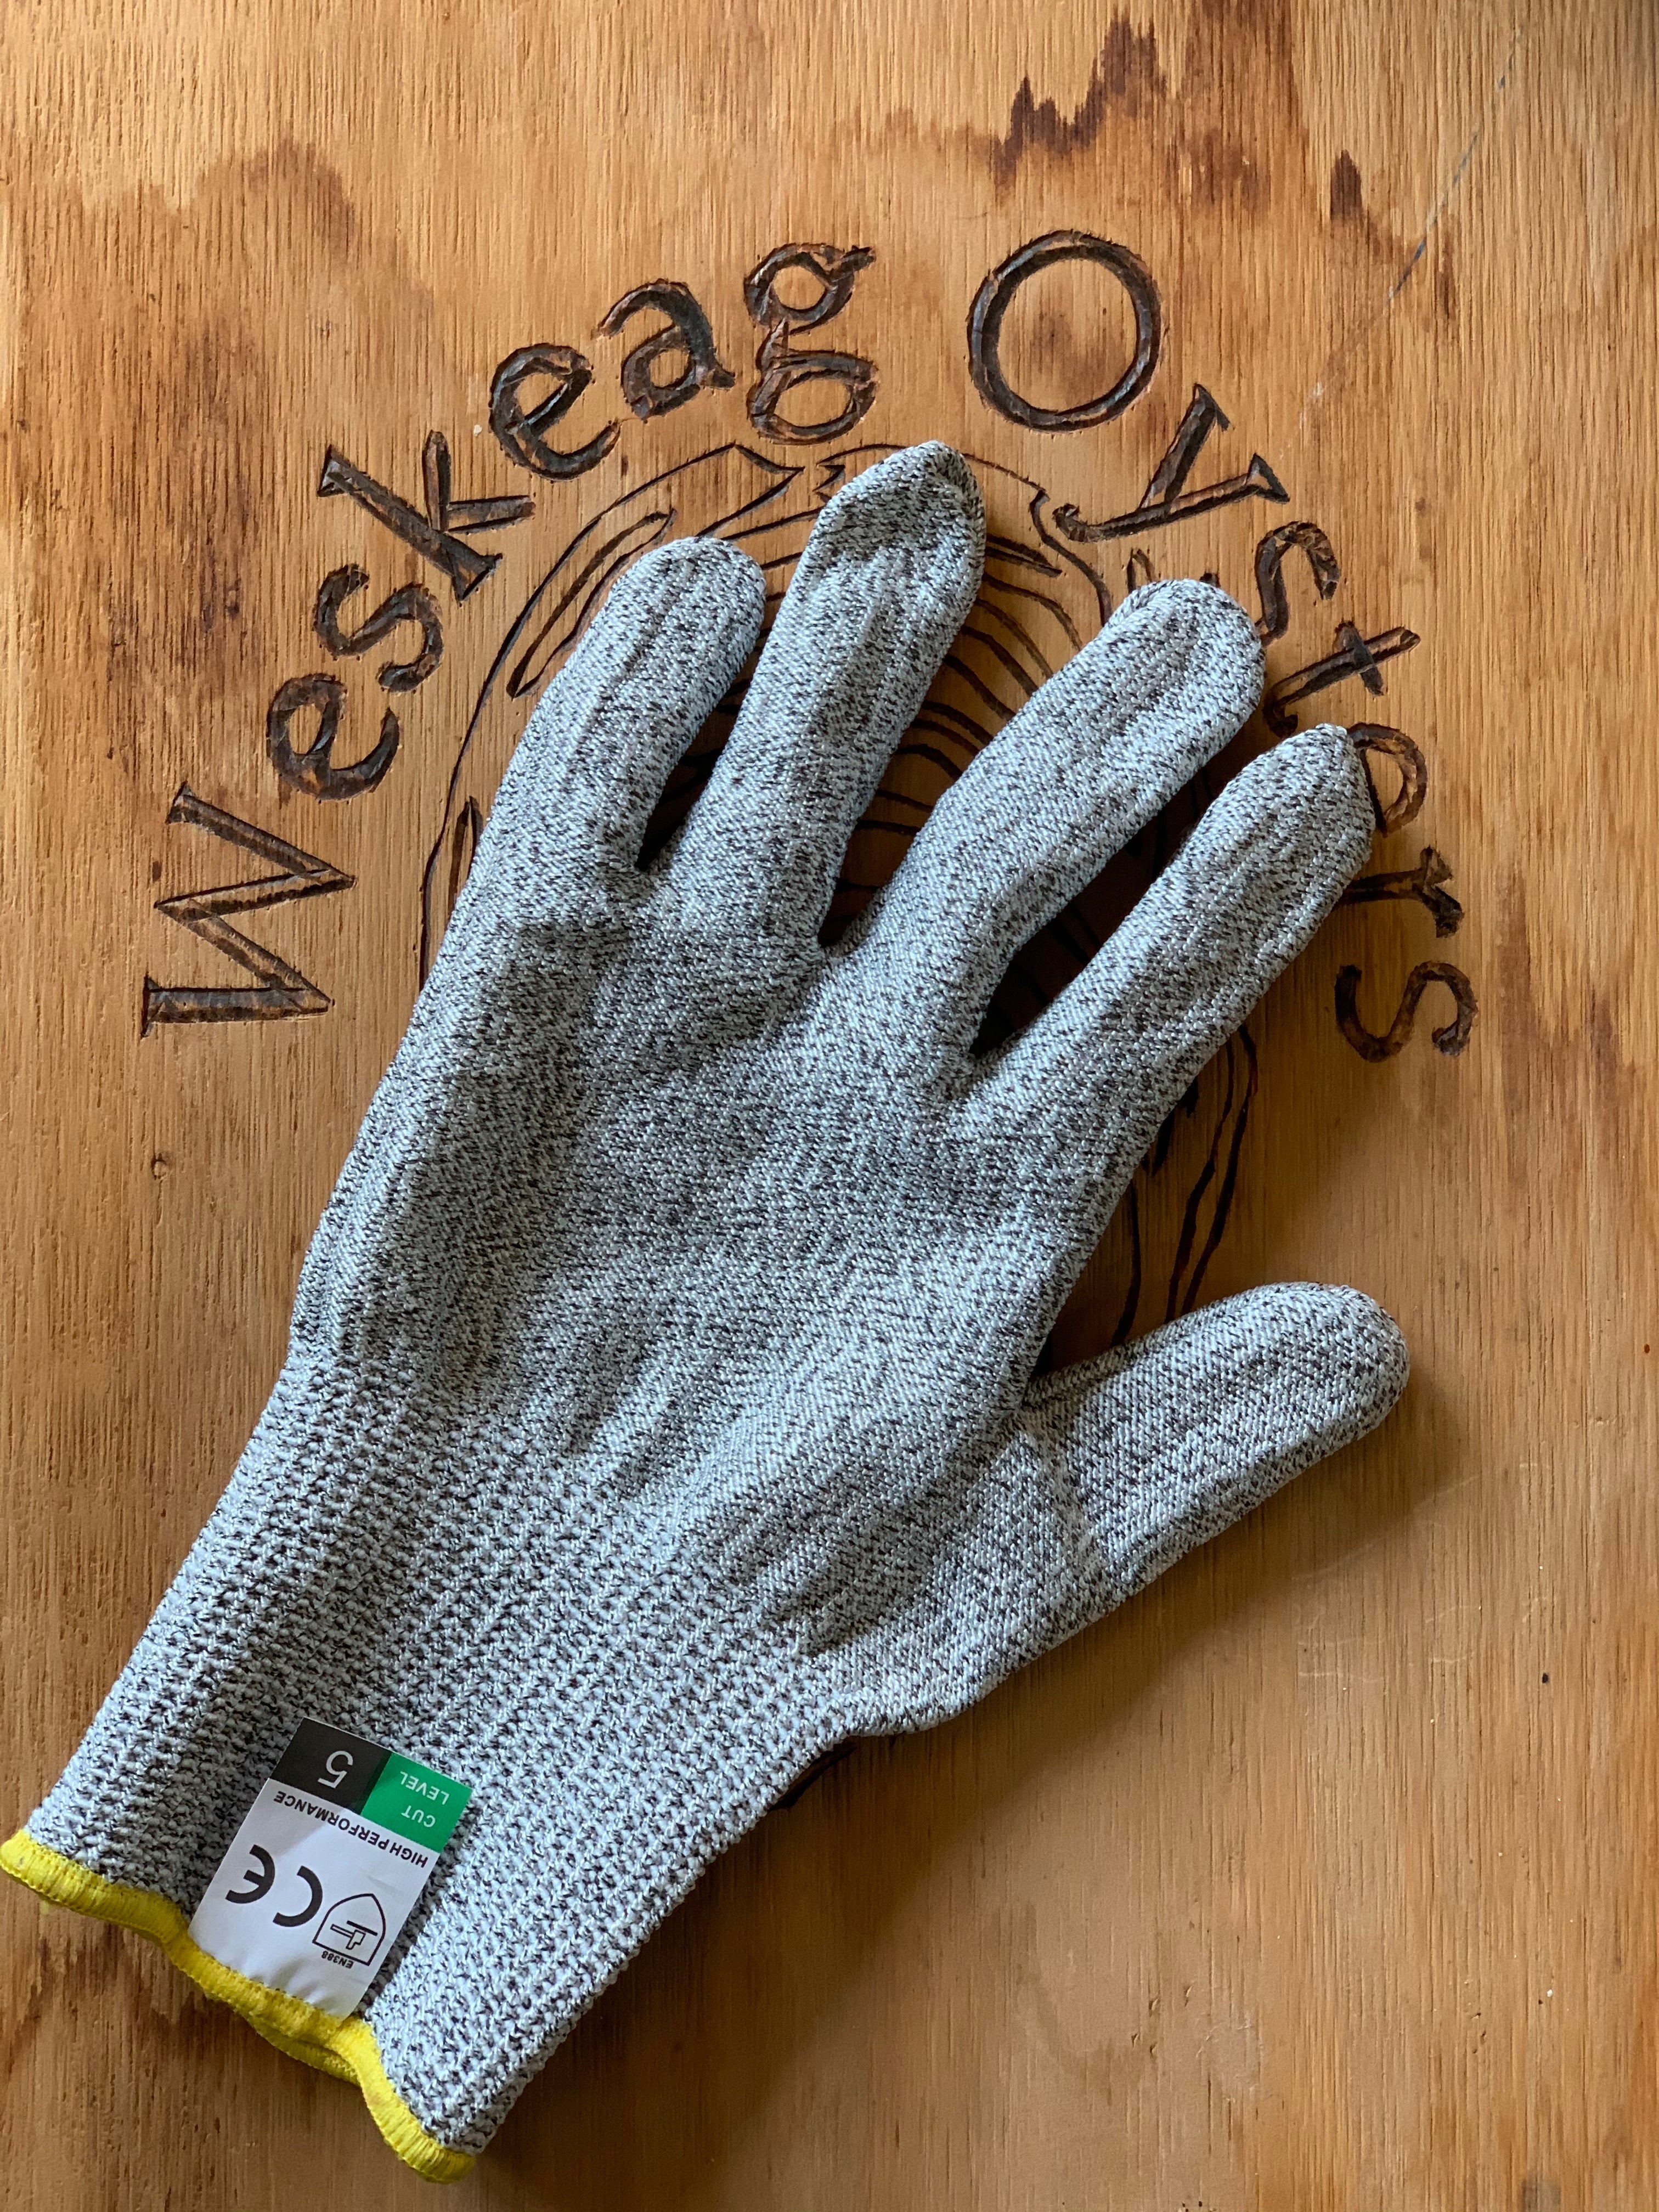 Oyster Shucking Glove (made by Schwer)